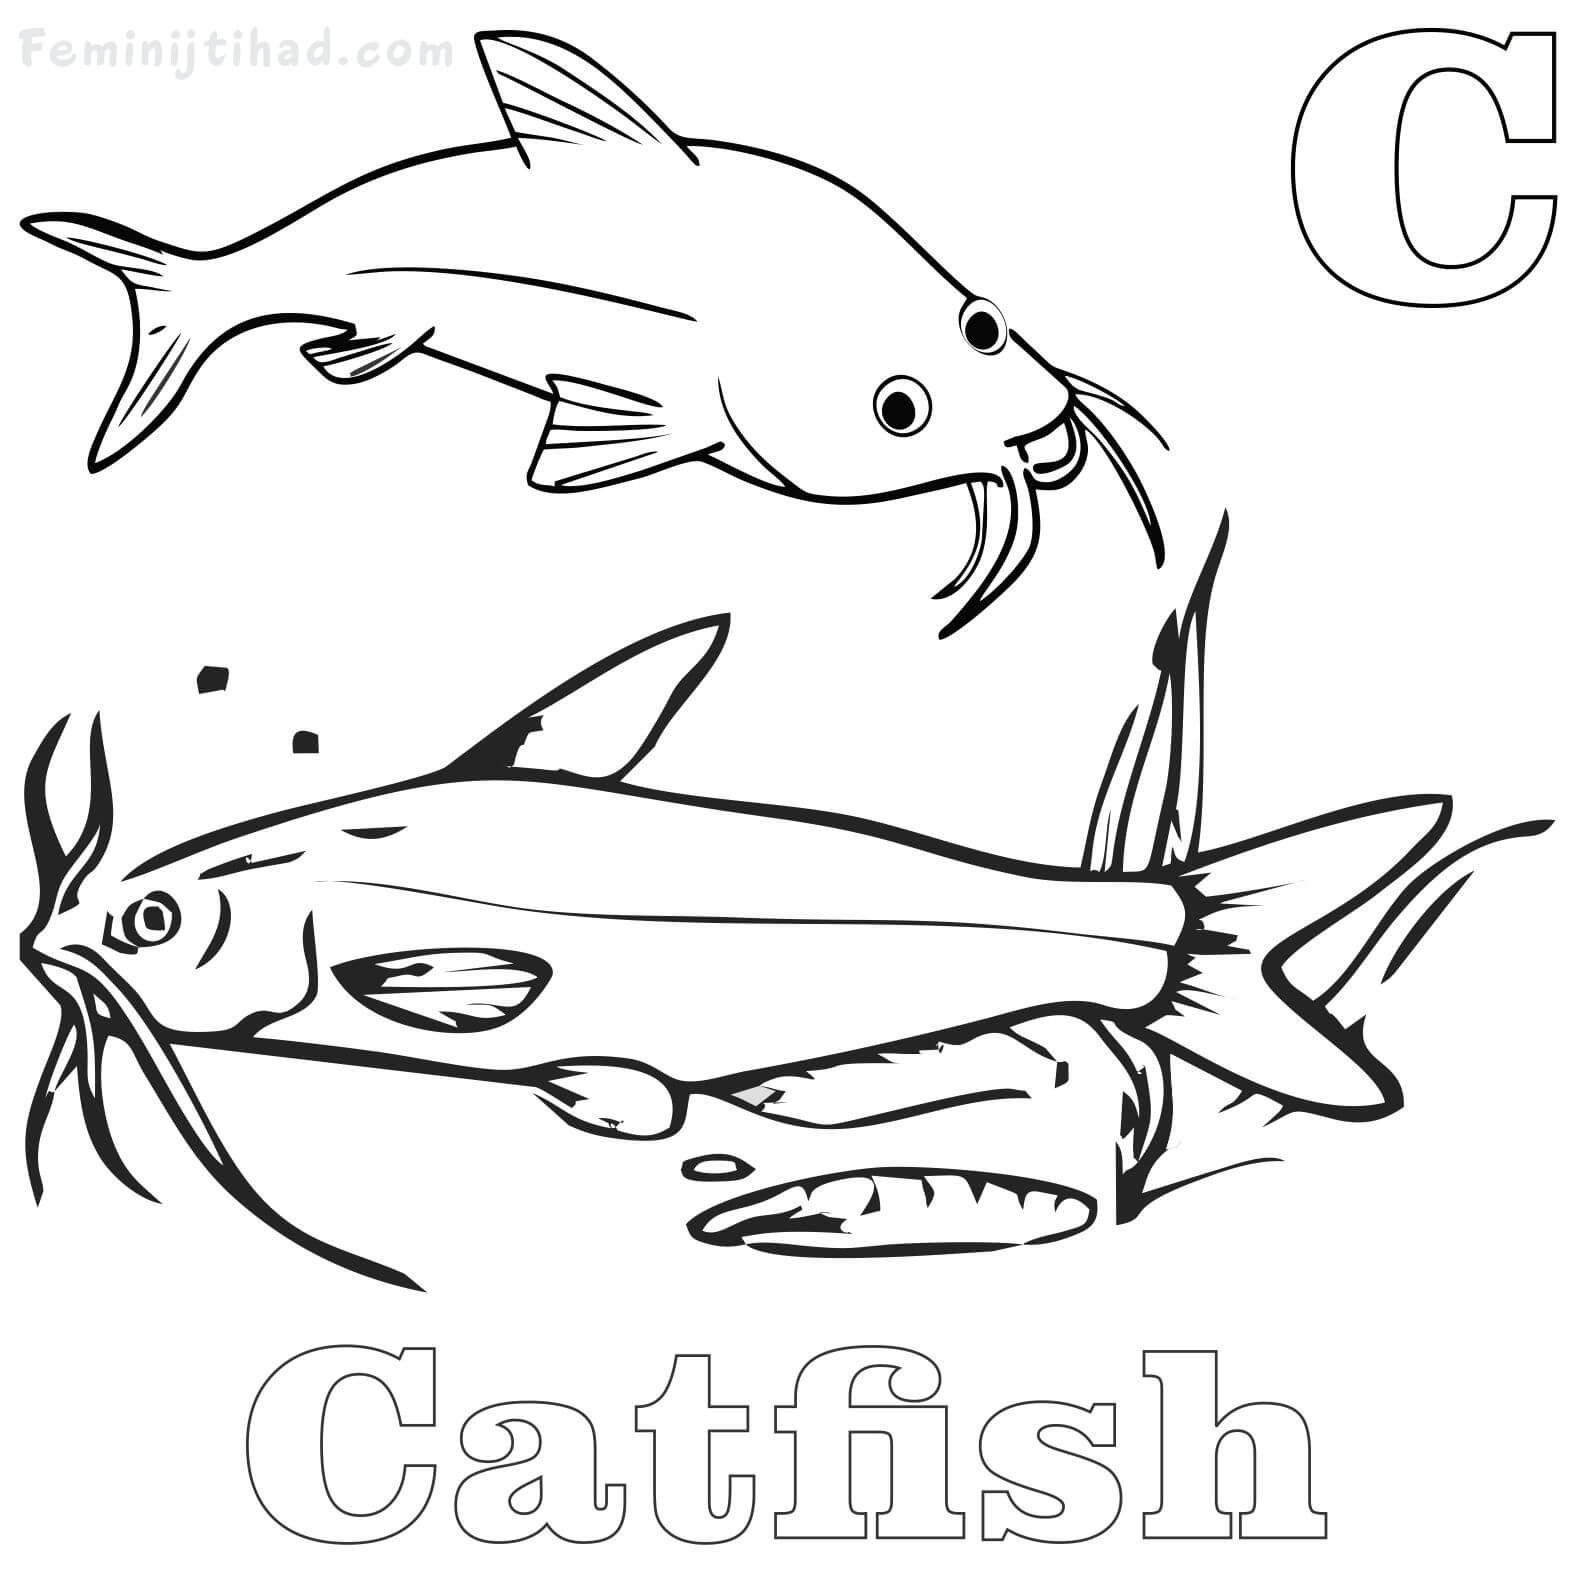 Catfish Coloring Page at GetColorings.com | Free printable ...